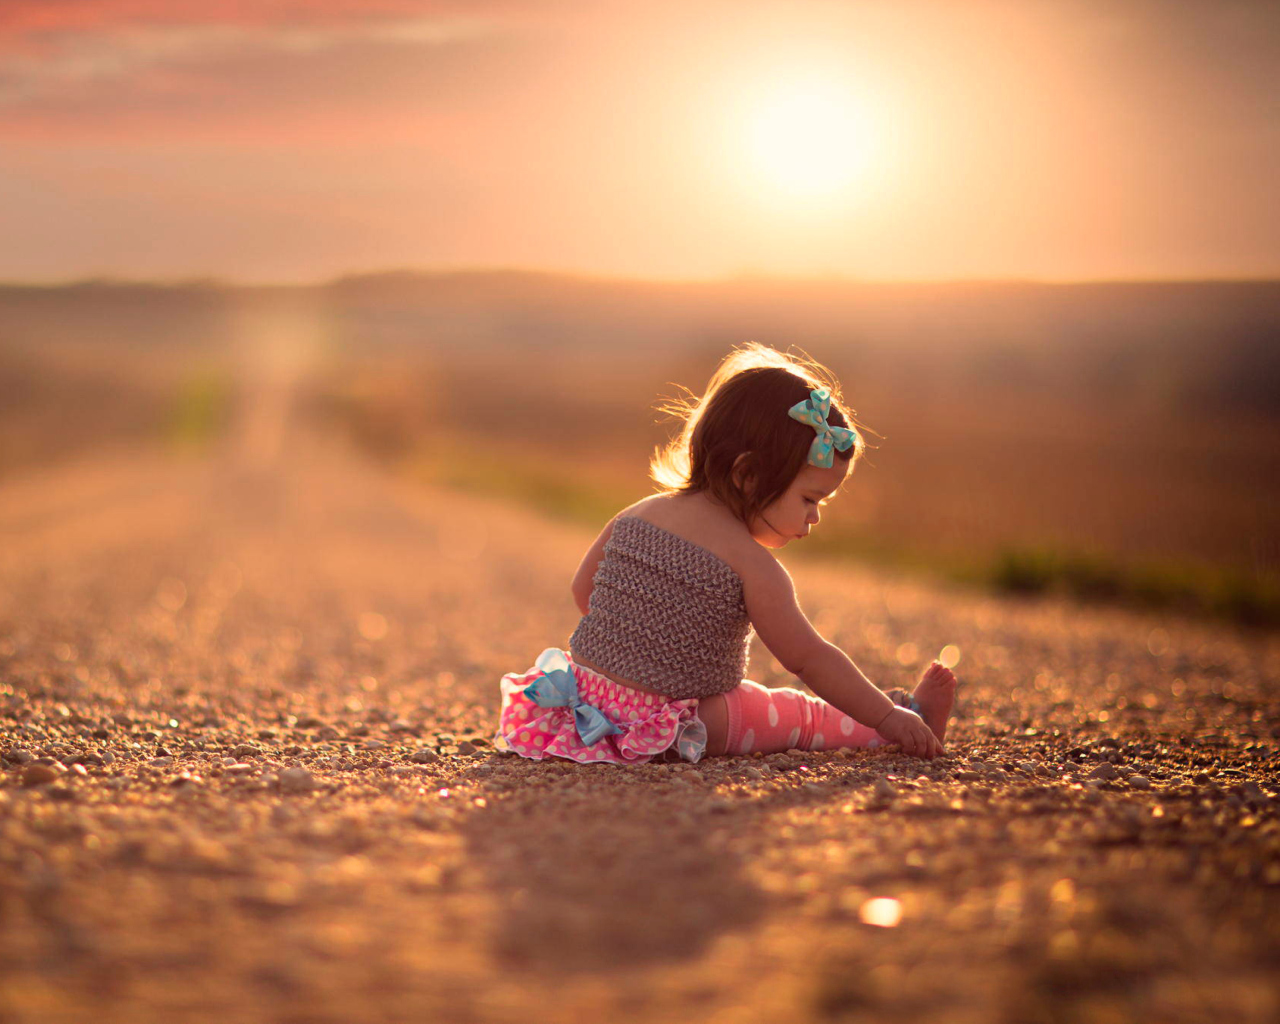 Обои Child On Road At Sunset 1280x1024